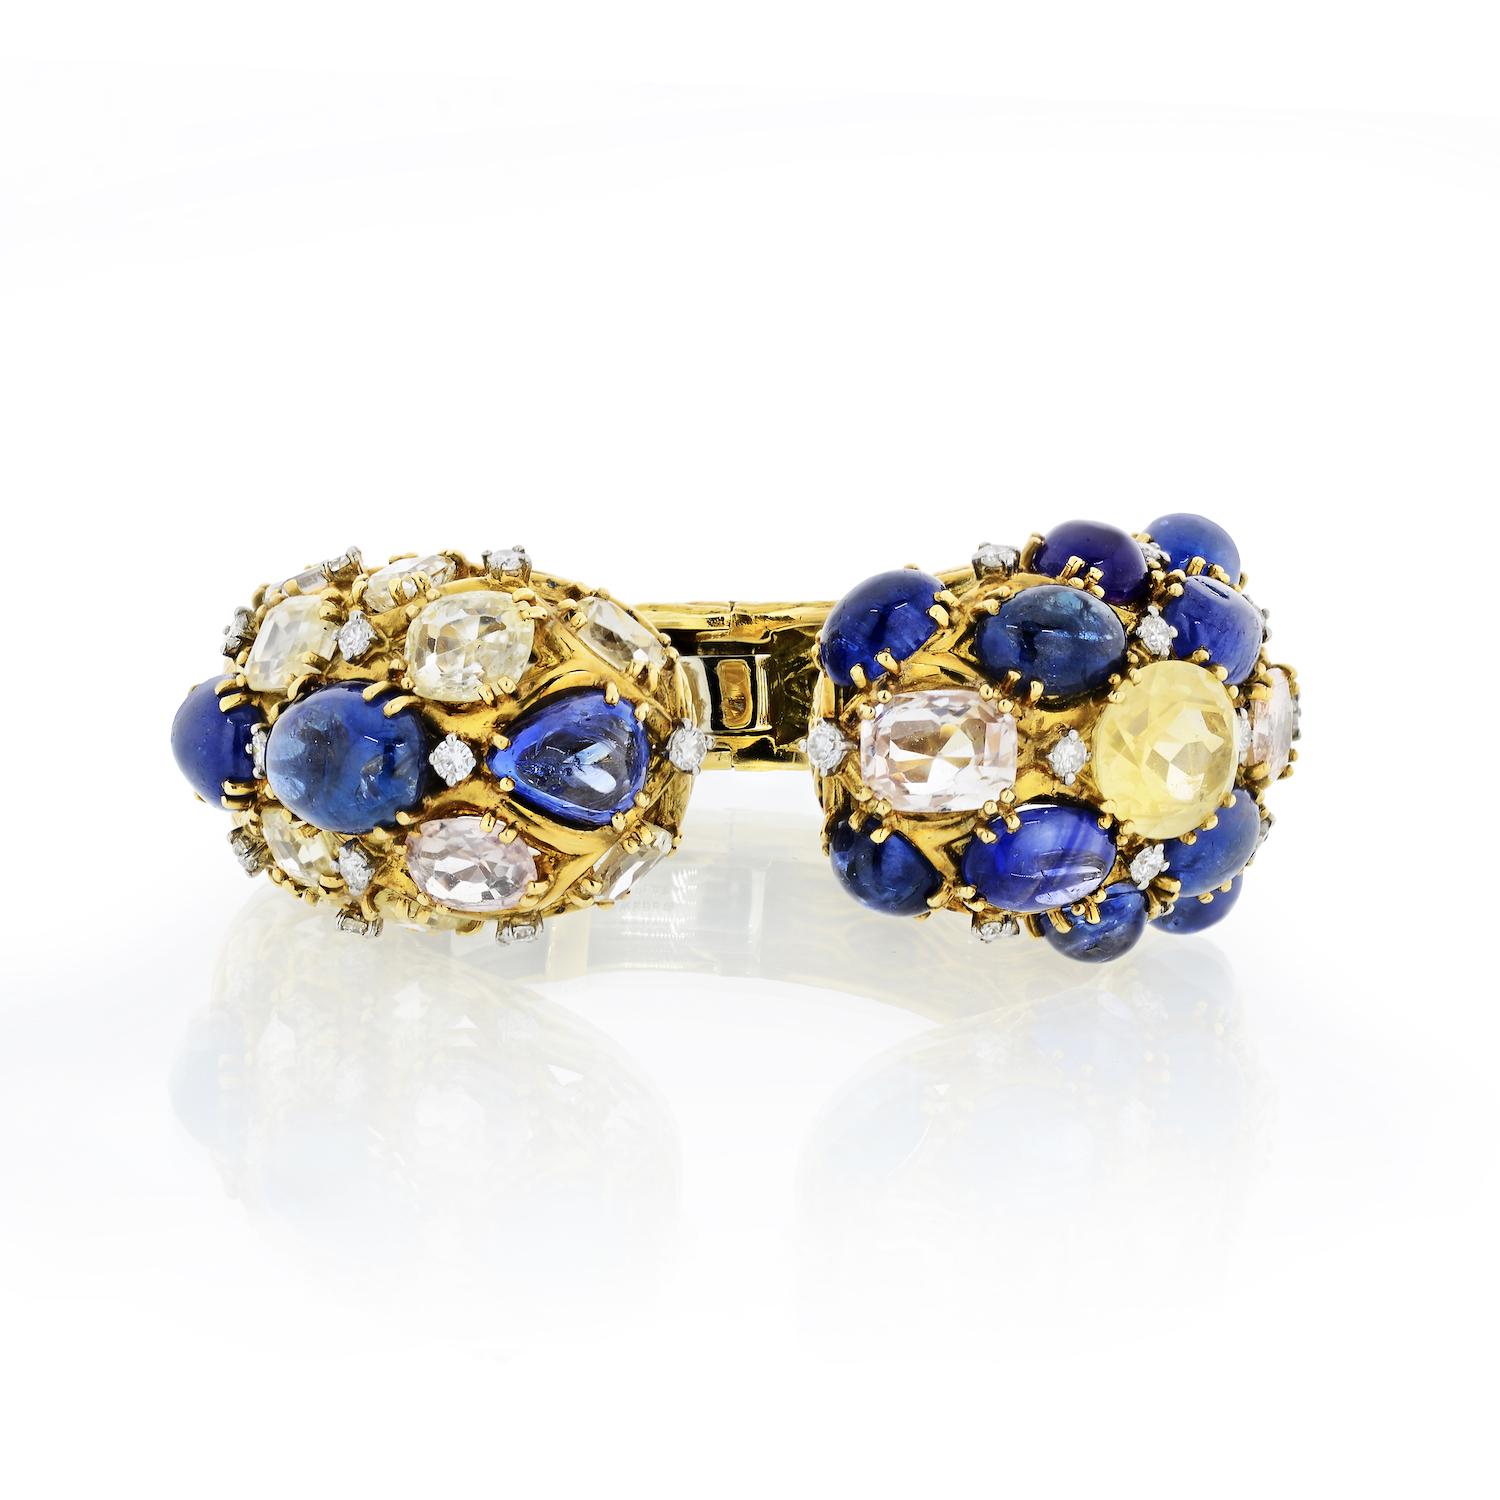 Modern David Webb 18 Karat Yellow Gold Diamond, Colored Sapphire Bracelet